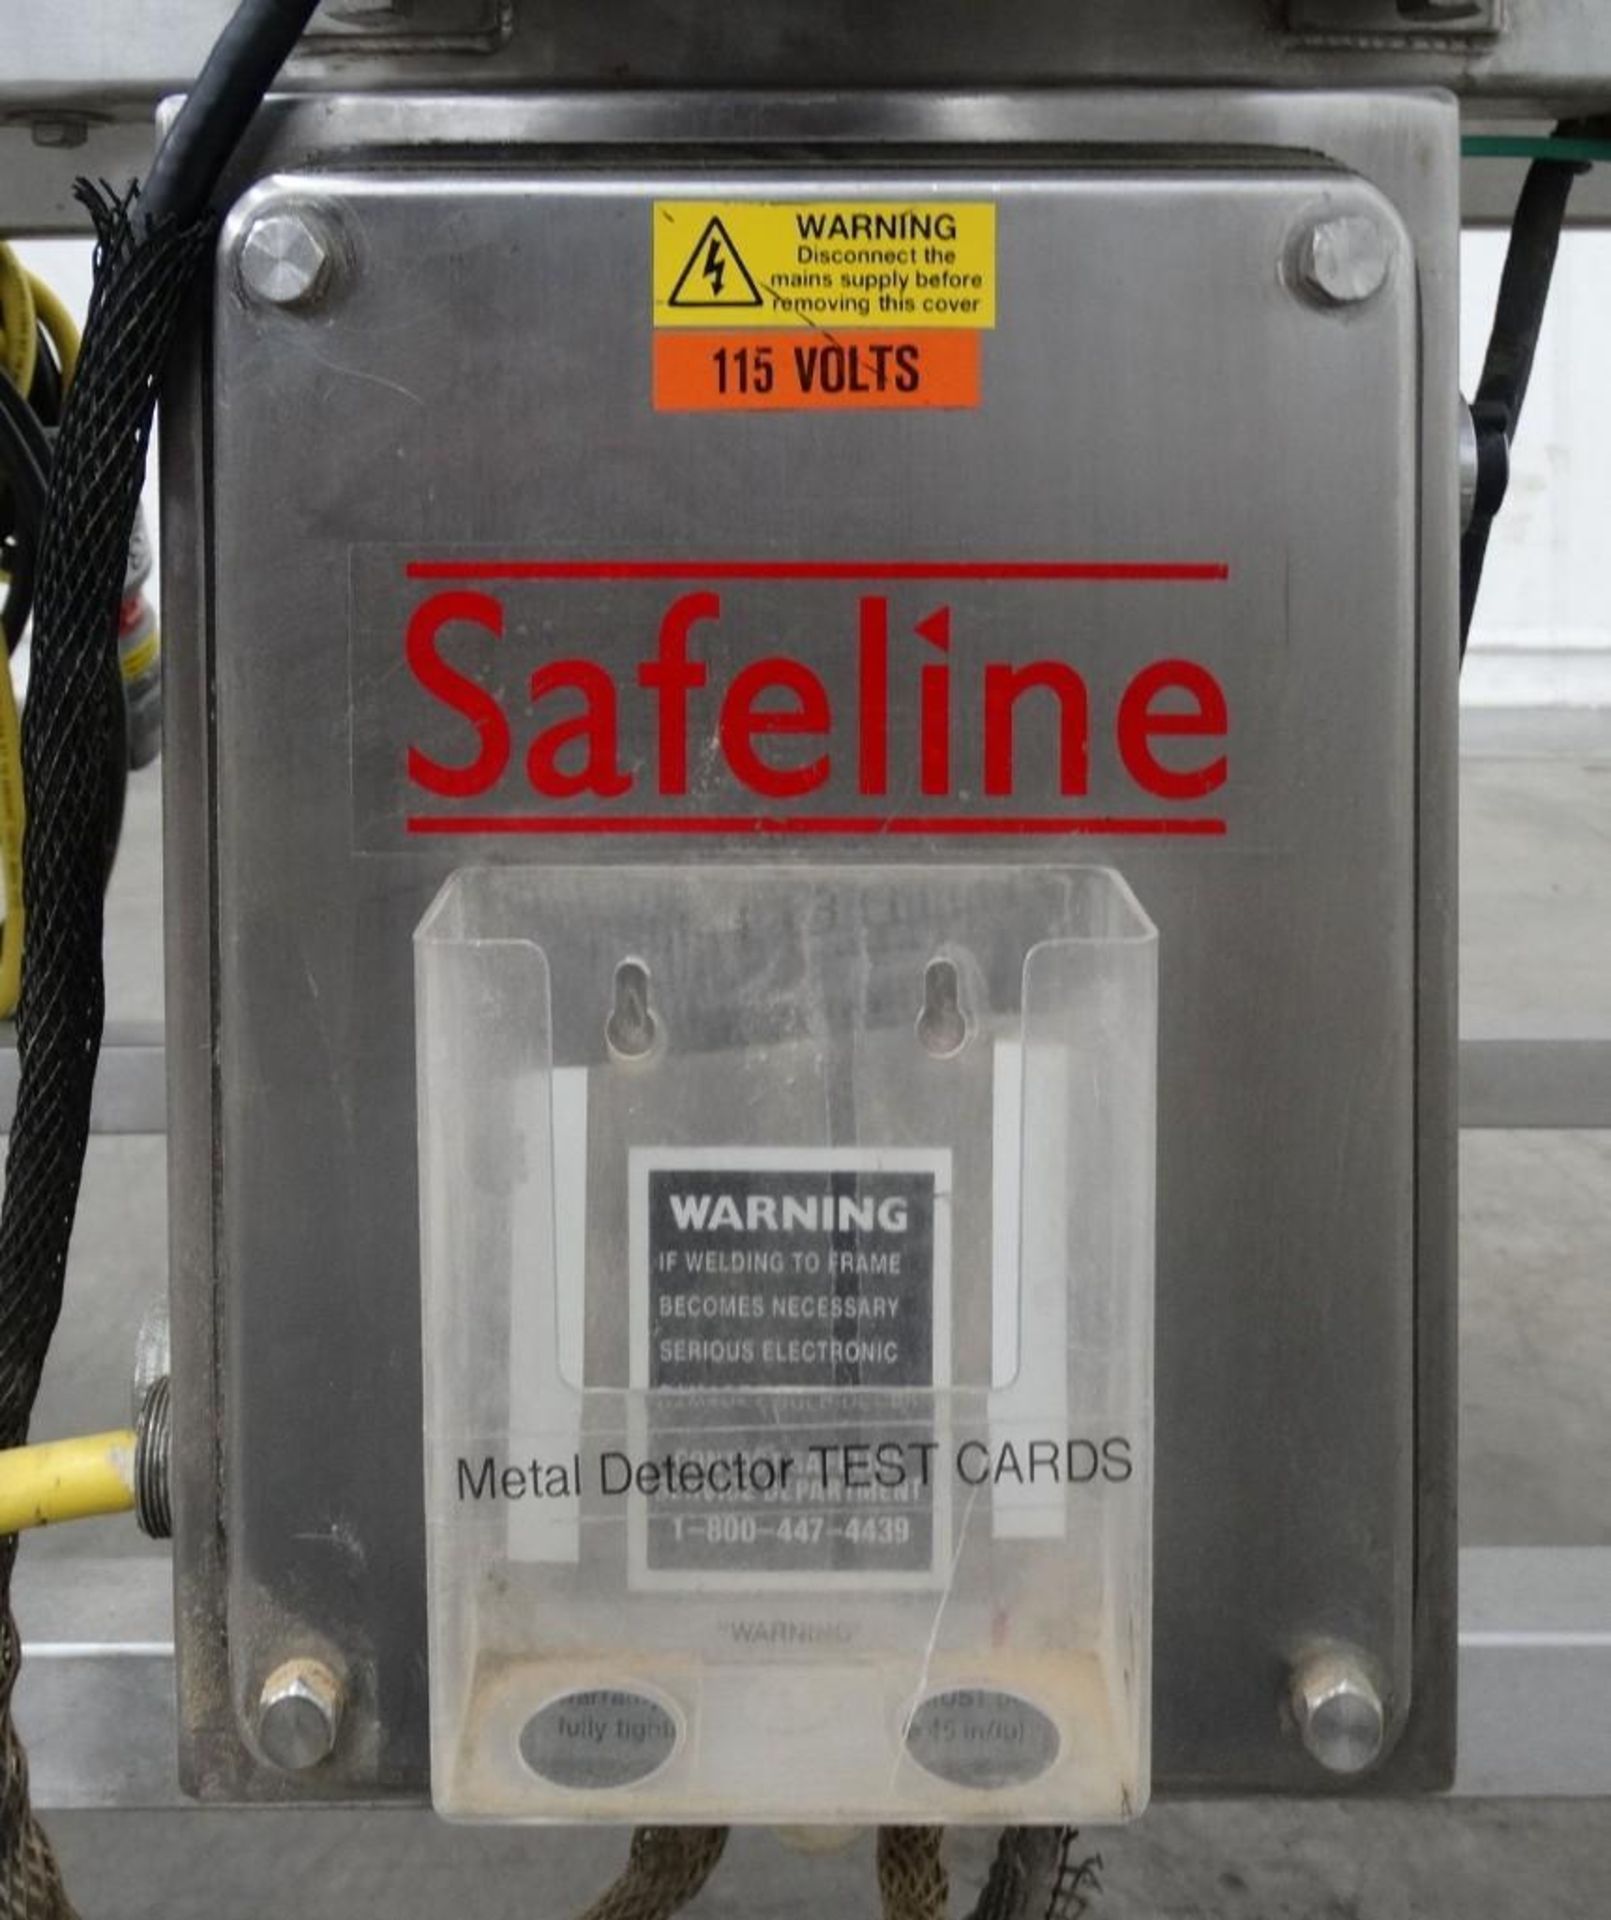 Safeline Metal Detector with Conveyor 3" x 11" - Image 6 of 7